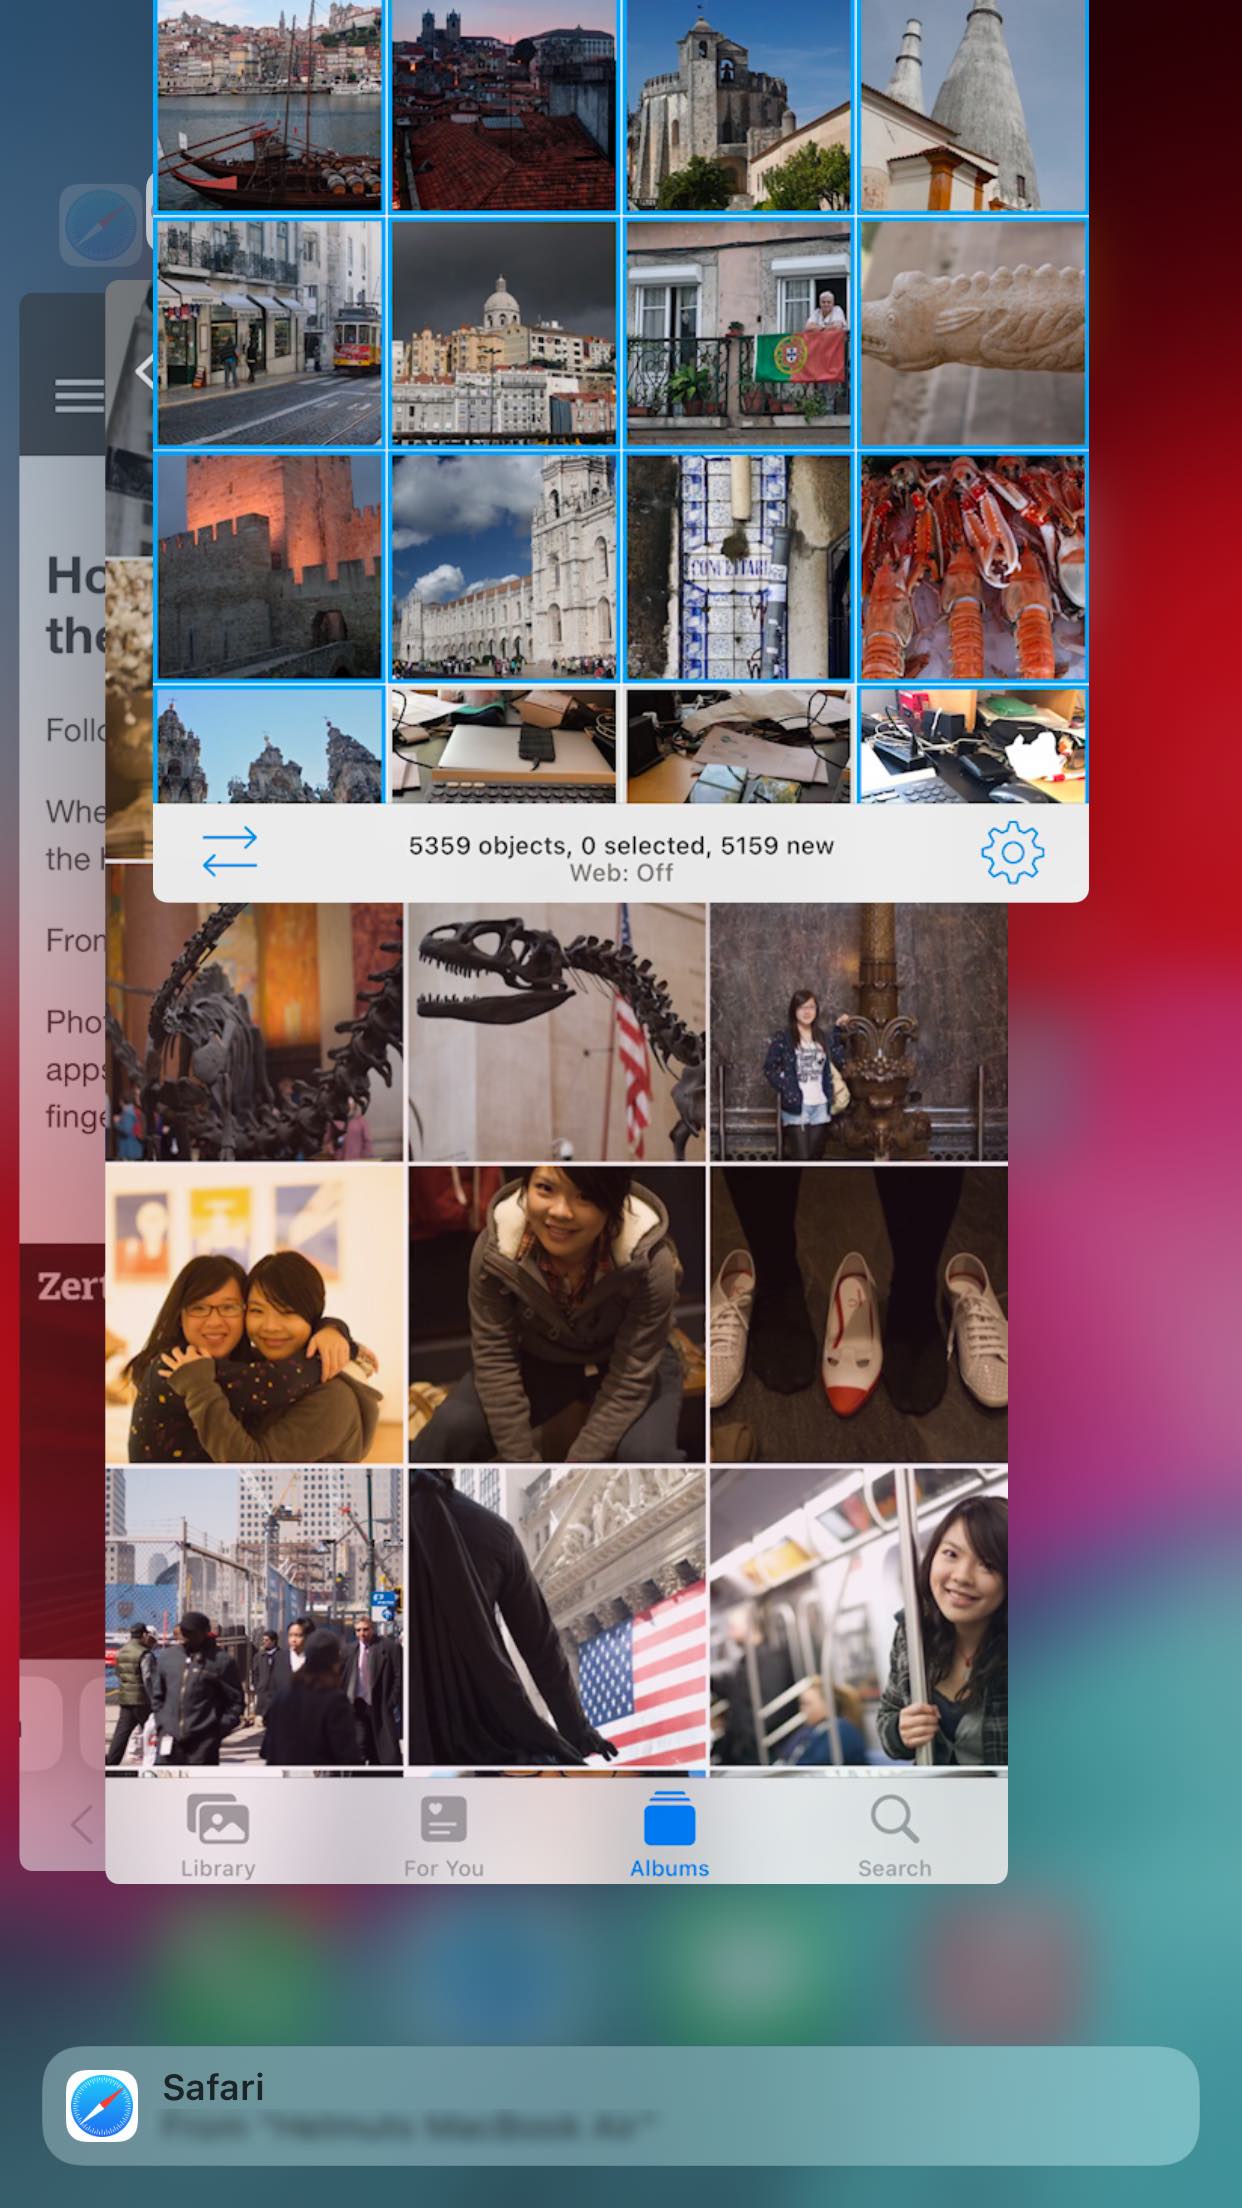 Swipe up on PhotoSync to close the app